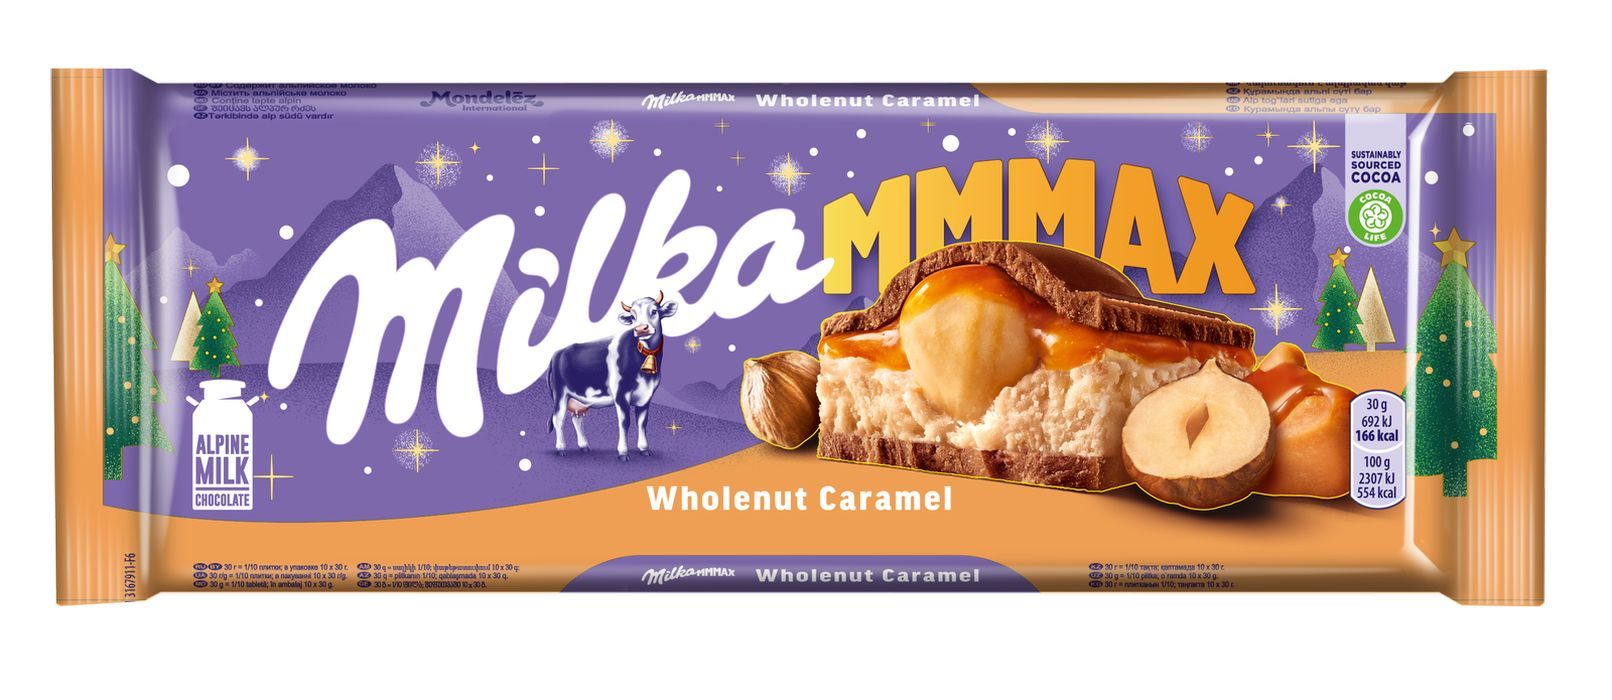 Шоколад Milka арахис-карамель, 276г